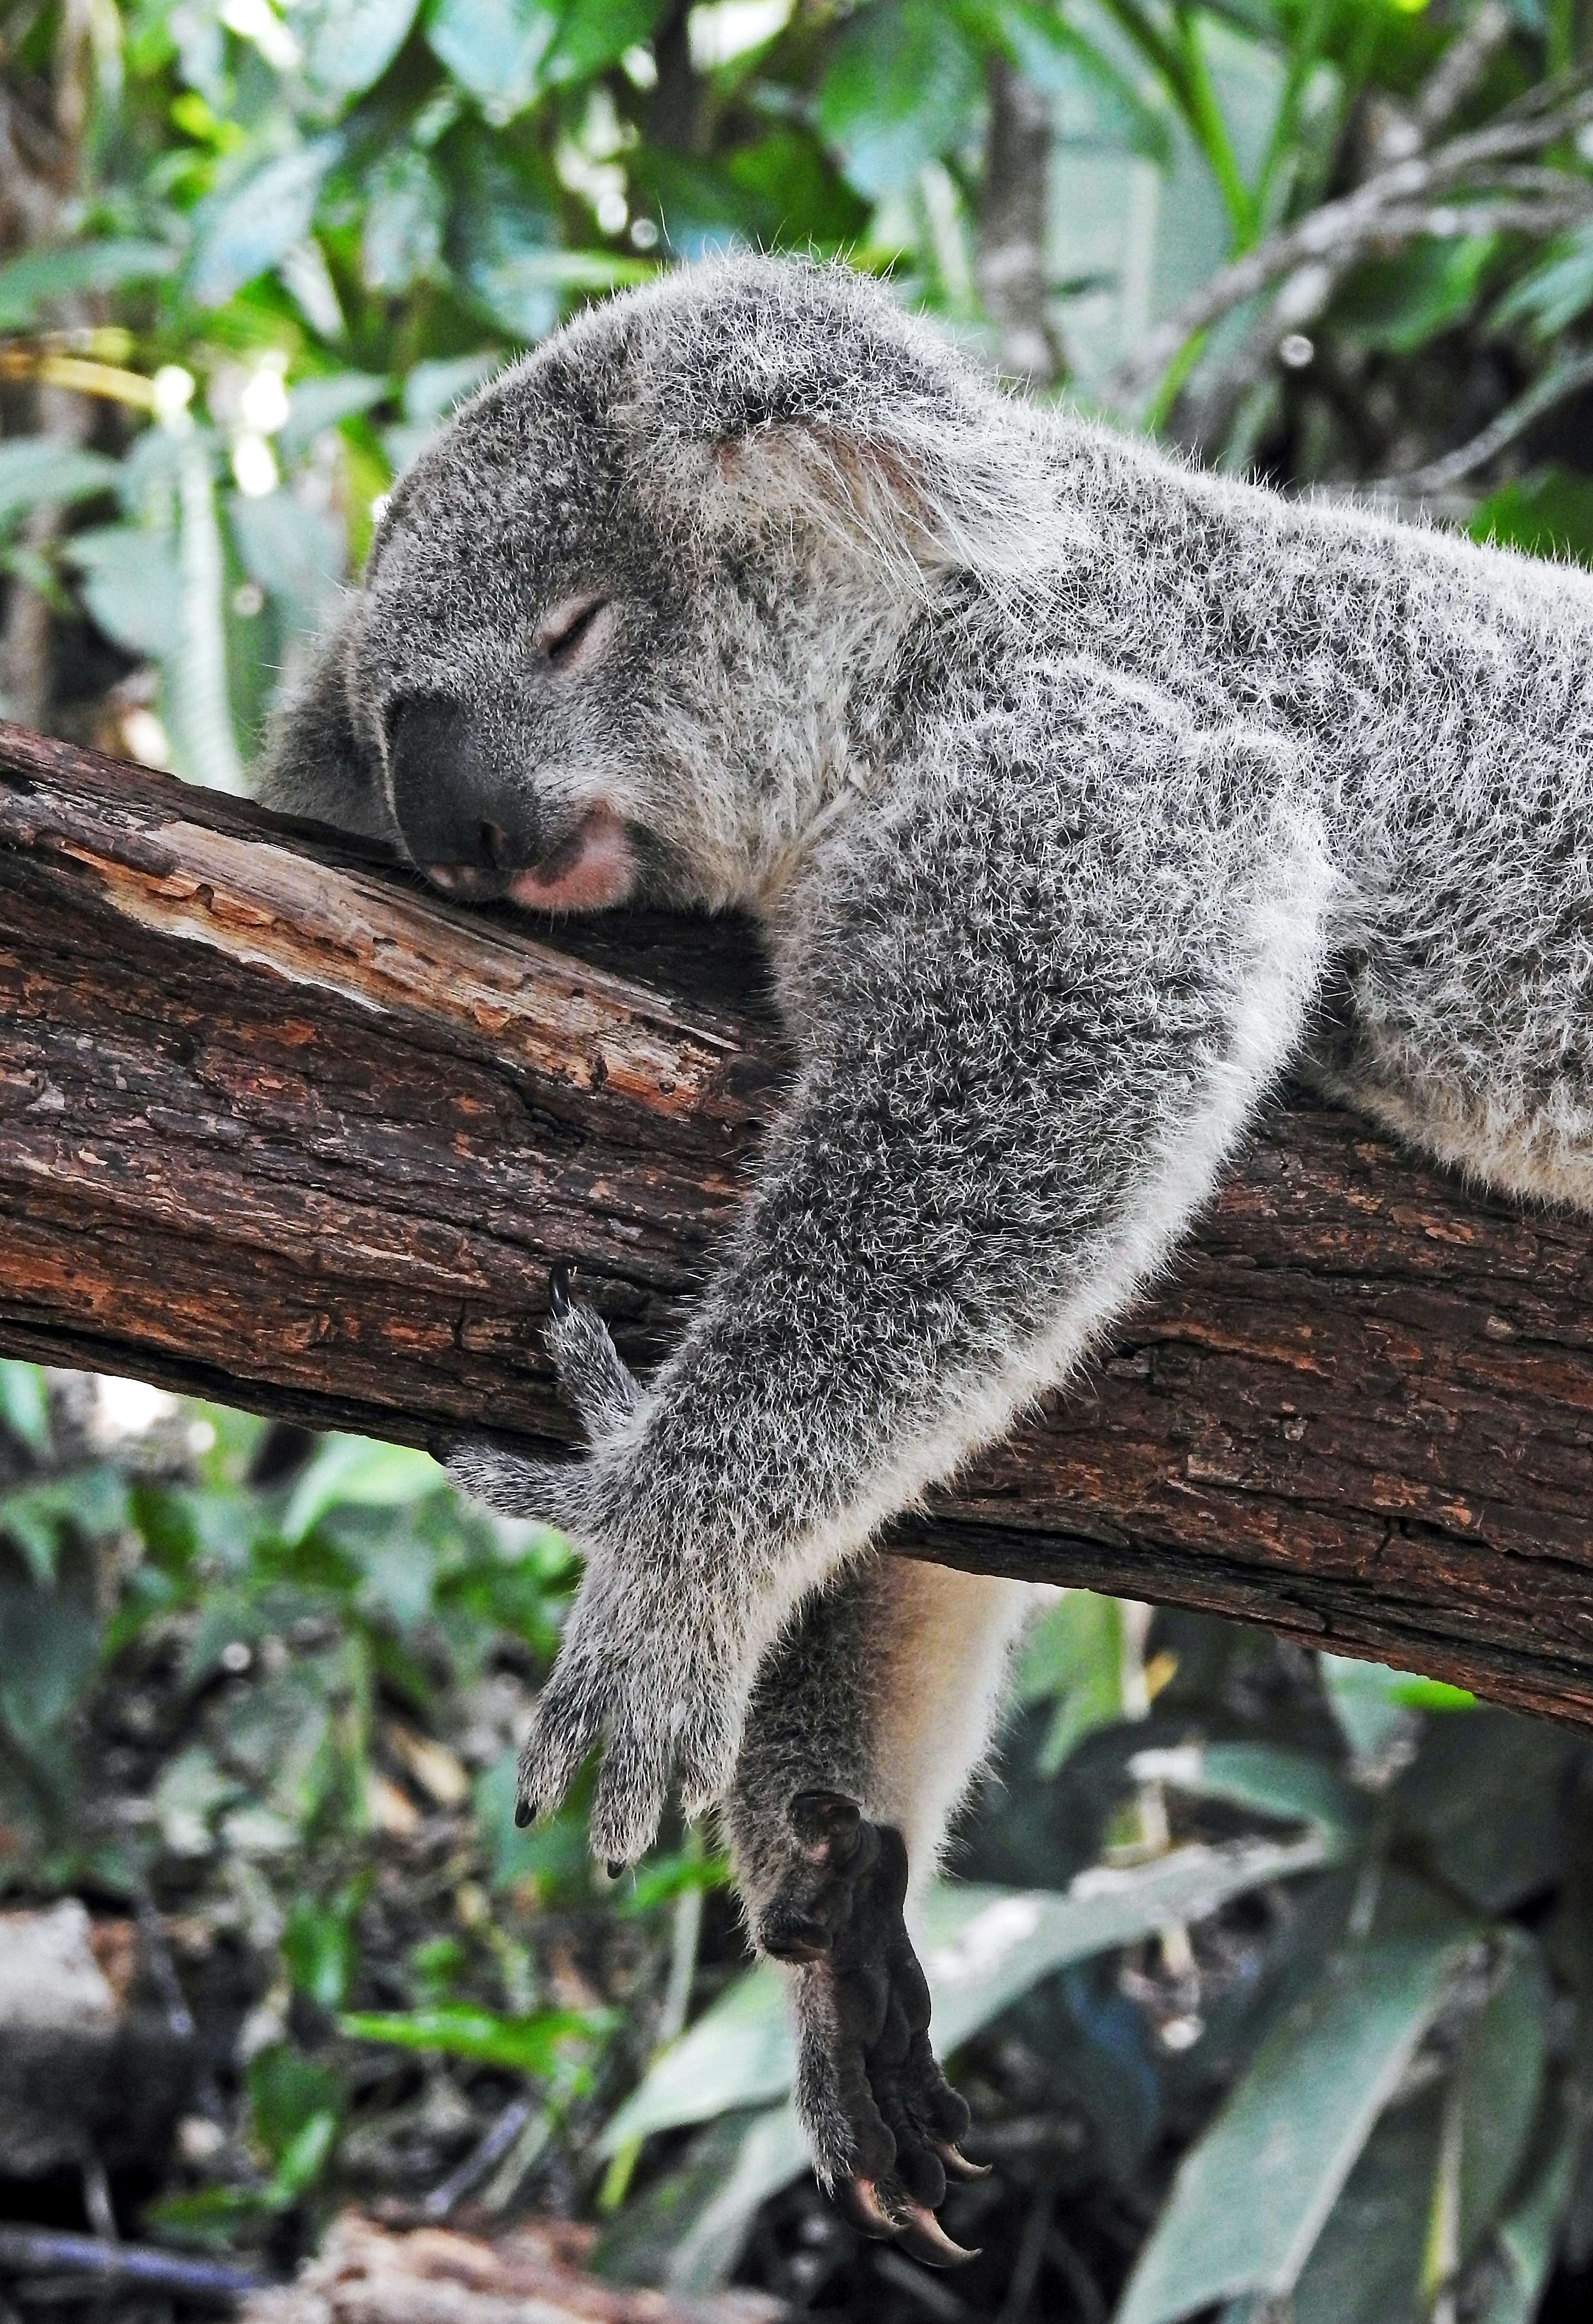 Koala sleeping on branch